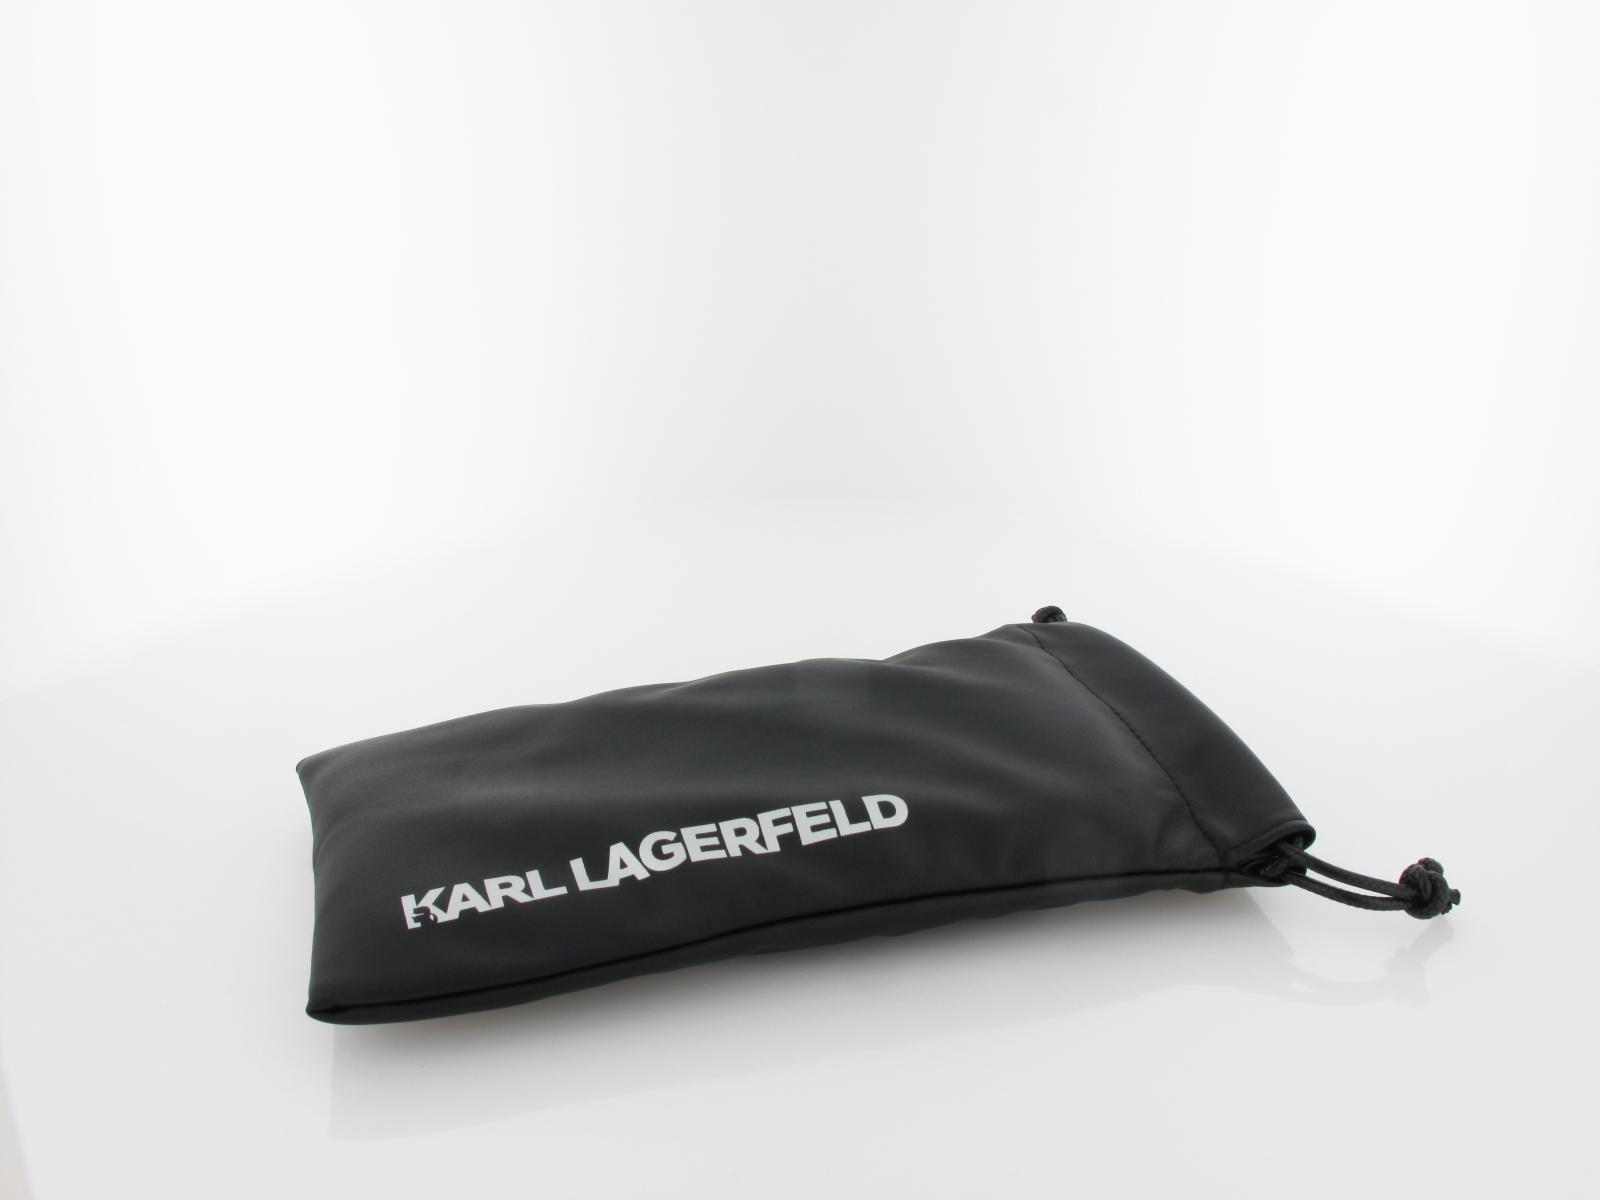 Karl Lagerfeld | KL6090S 002 52 | matte black / grey